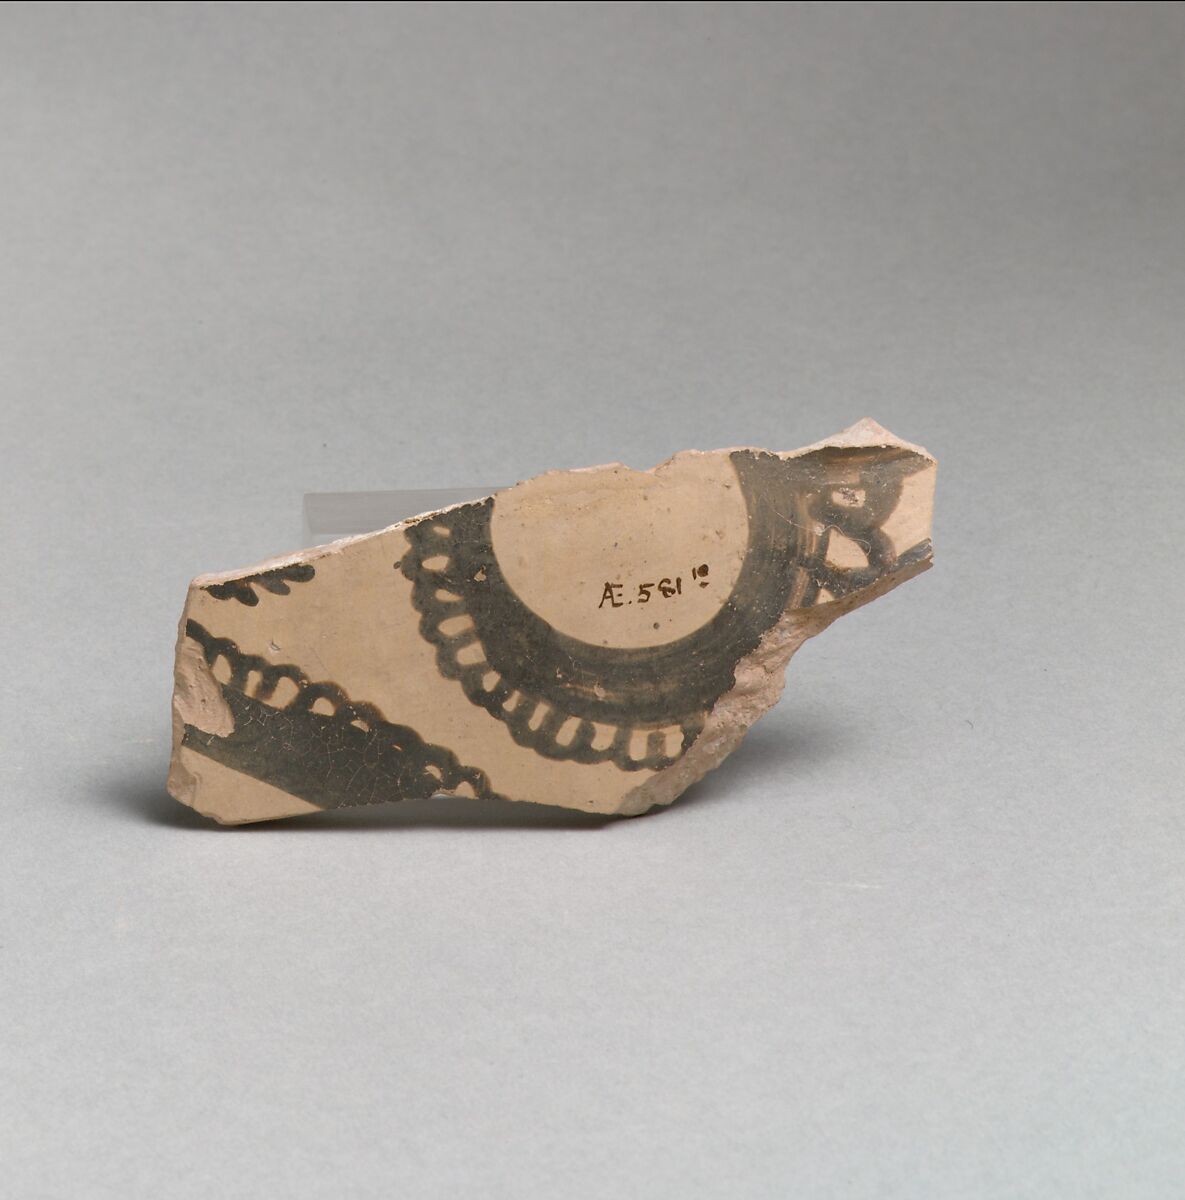 Terracotta vessel fragment with curvilinear decoration, Terracotta, Minoan 